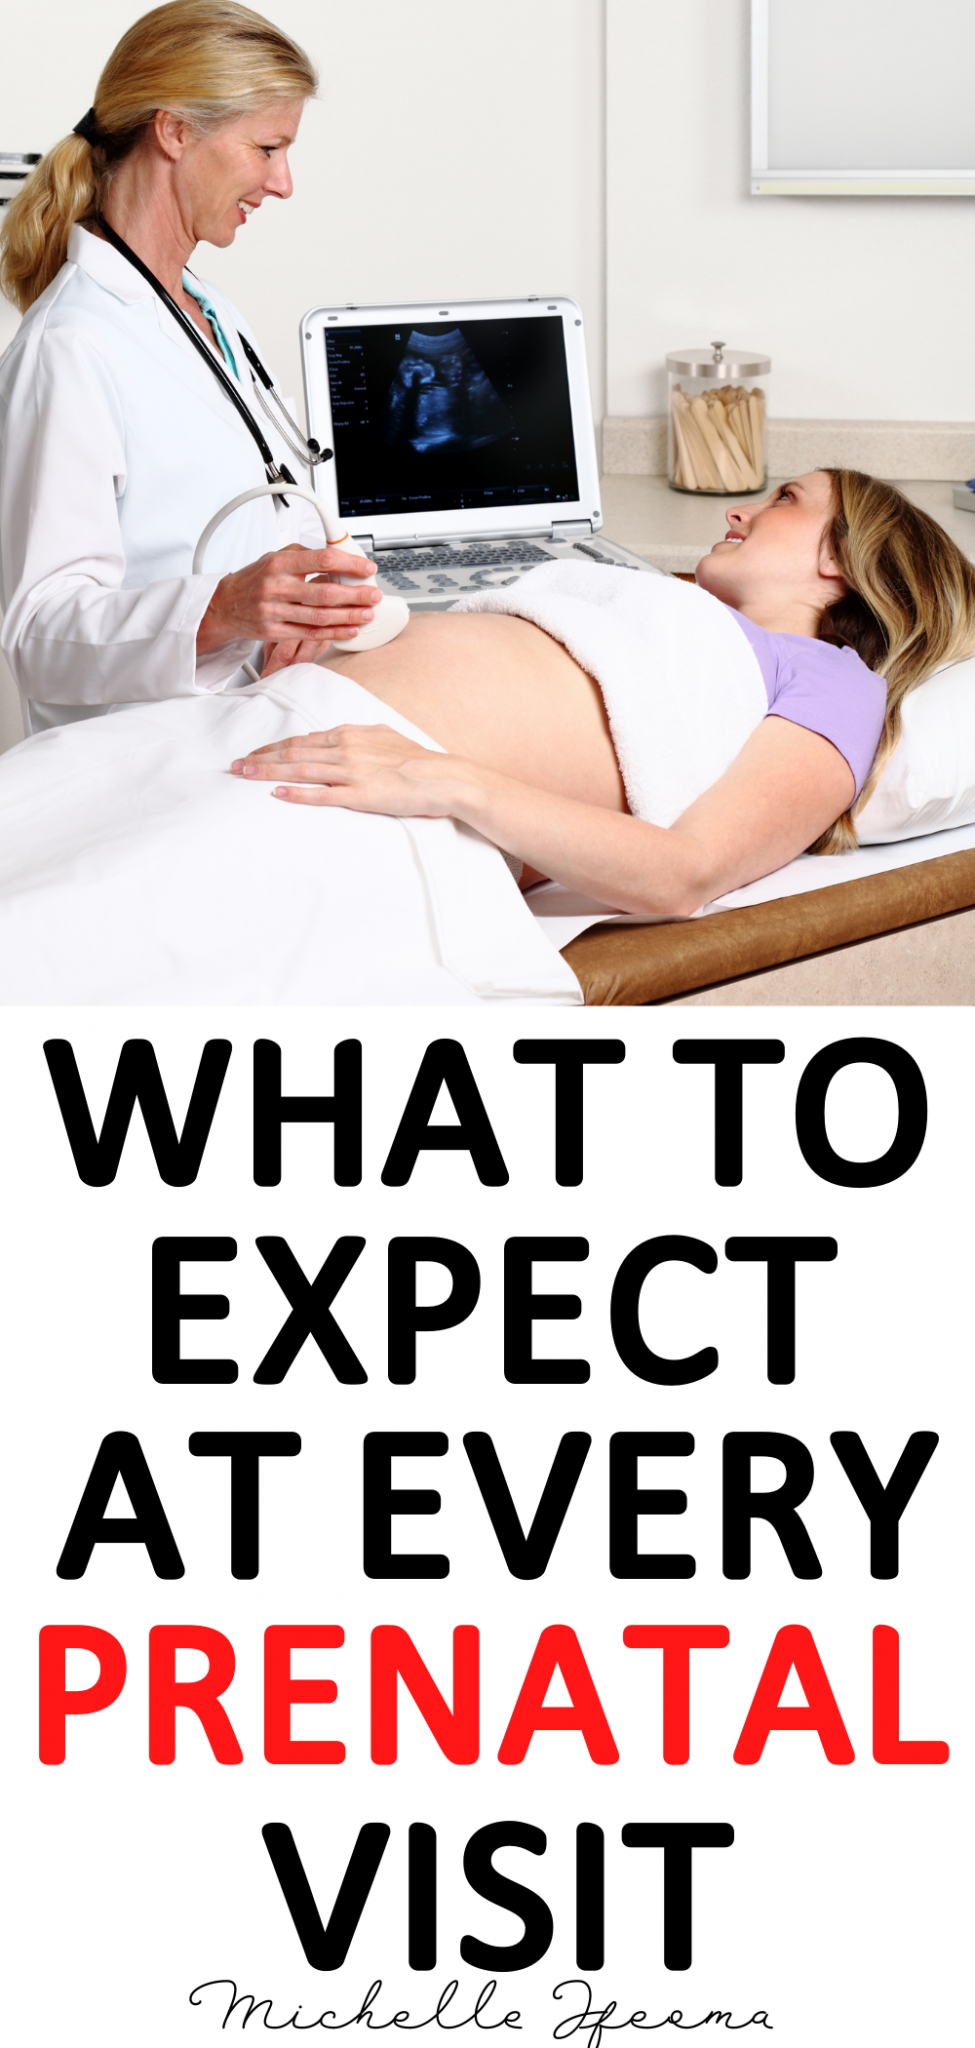 prenatal visit when